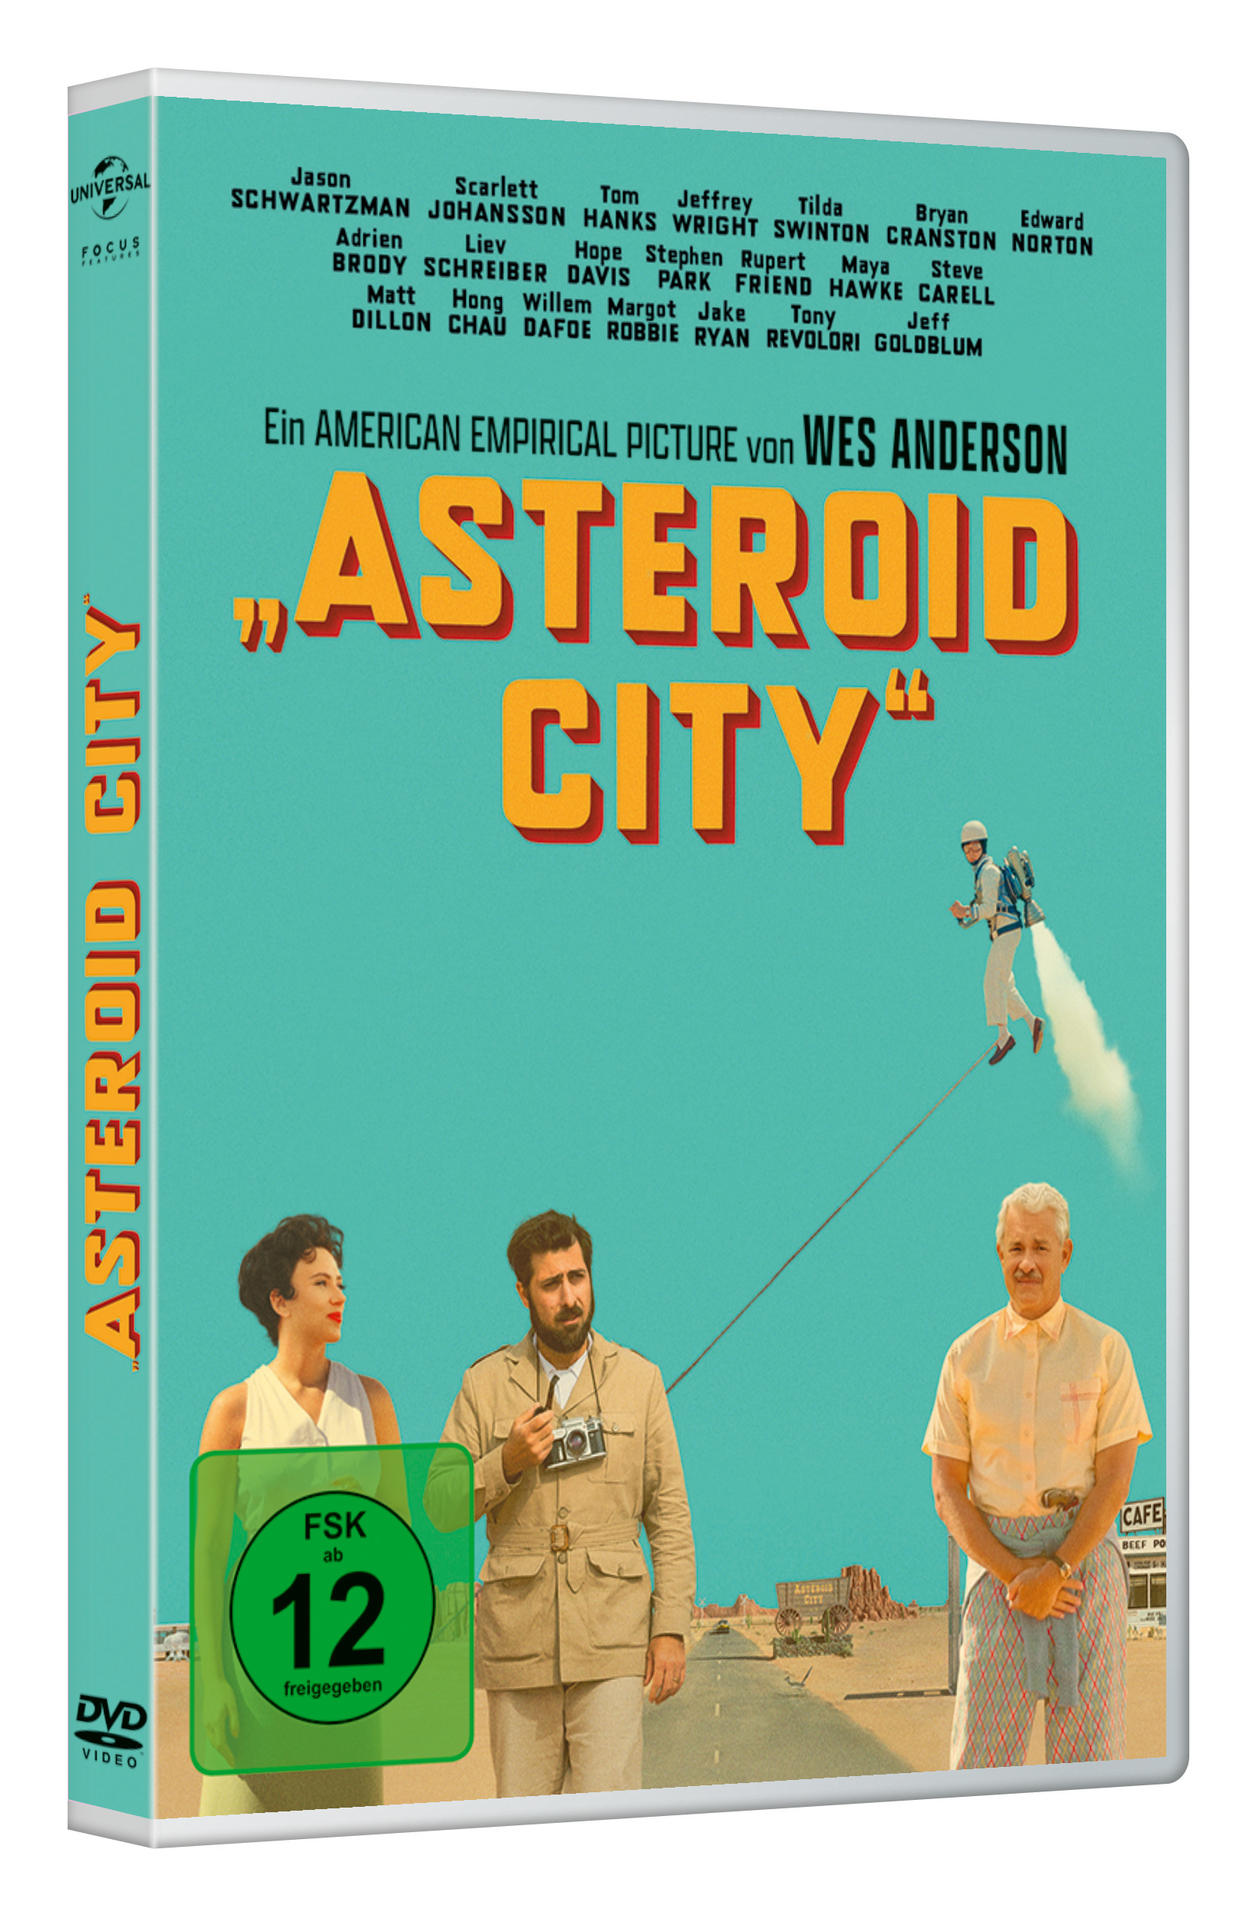 City Asteroid DVD